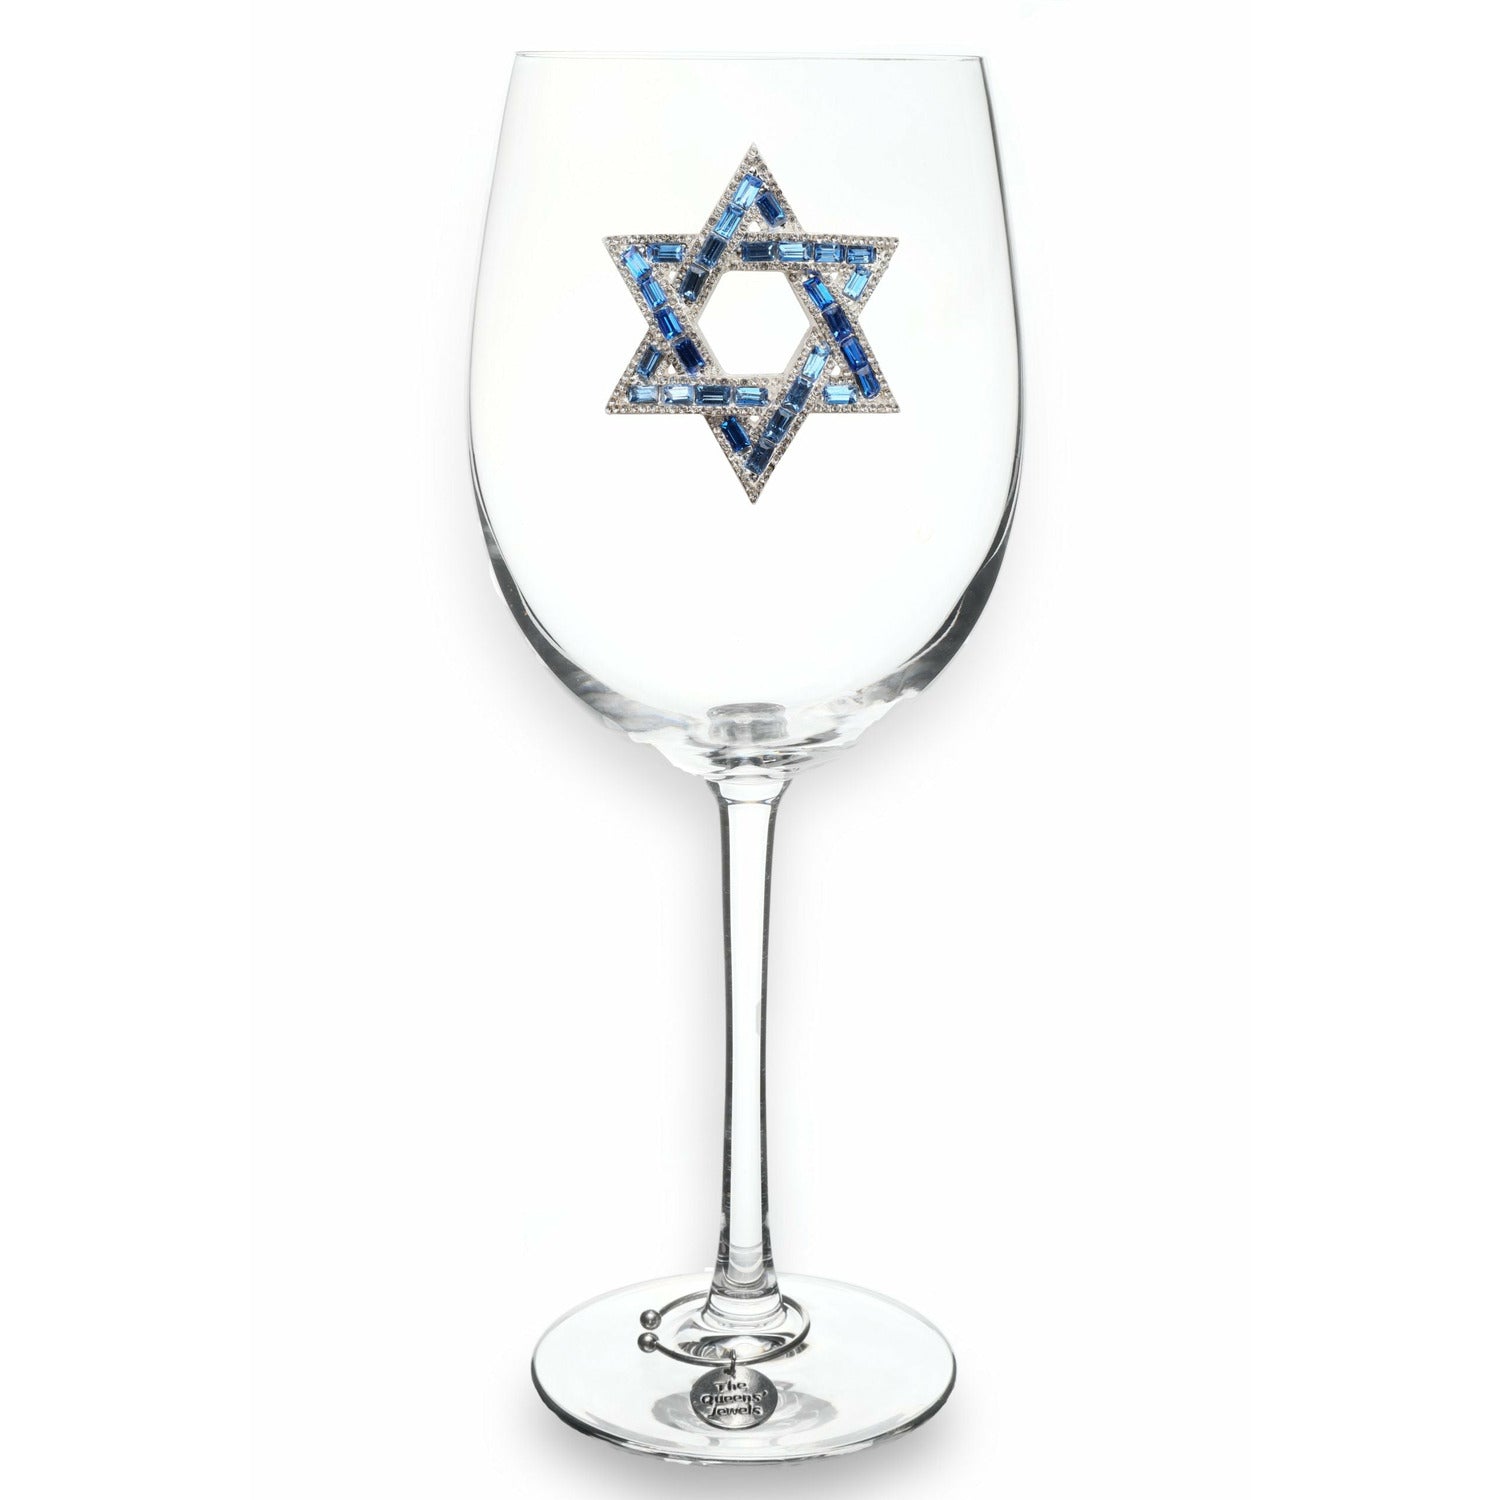 STAR OF DAVID JEWELED STEMMED WINE GLASS